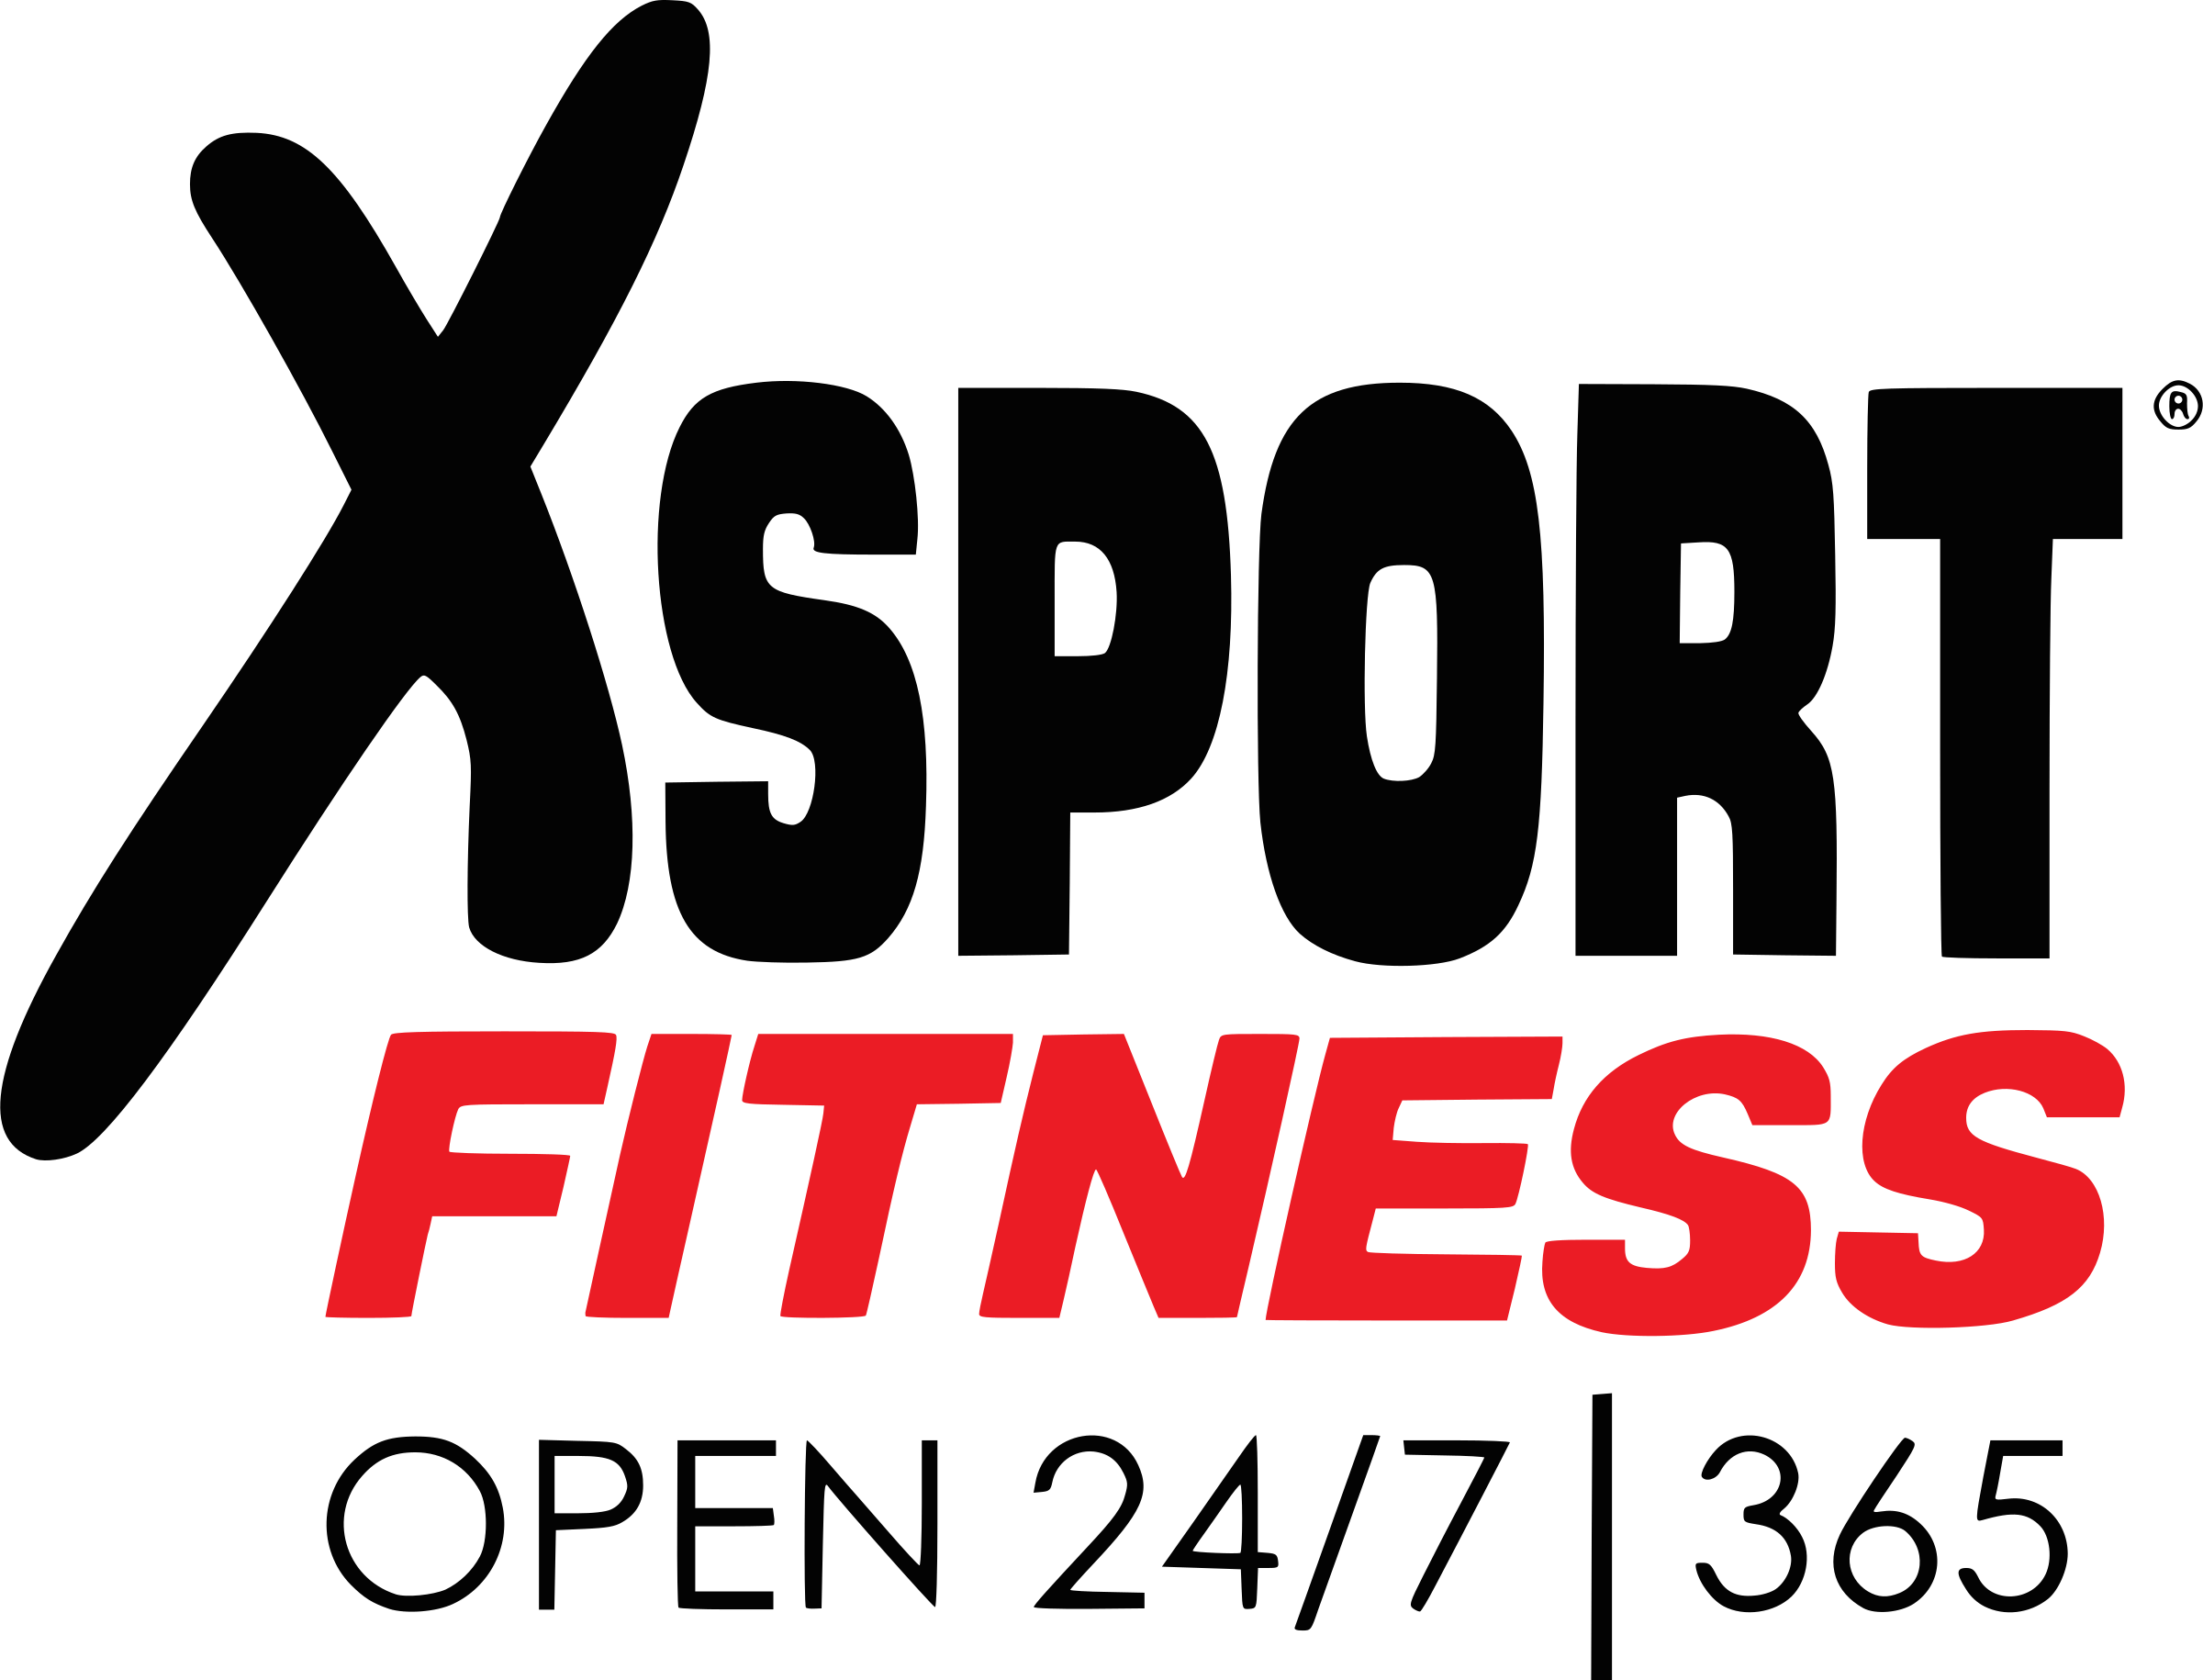 XSport Logo - Xsport Fitness Logo PNG Transparent & SVG Vector - Freebie Supply